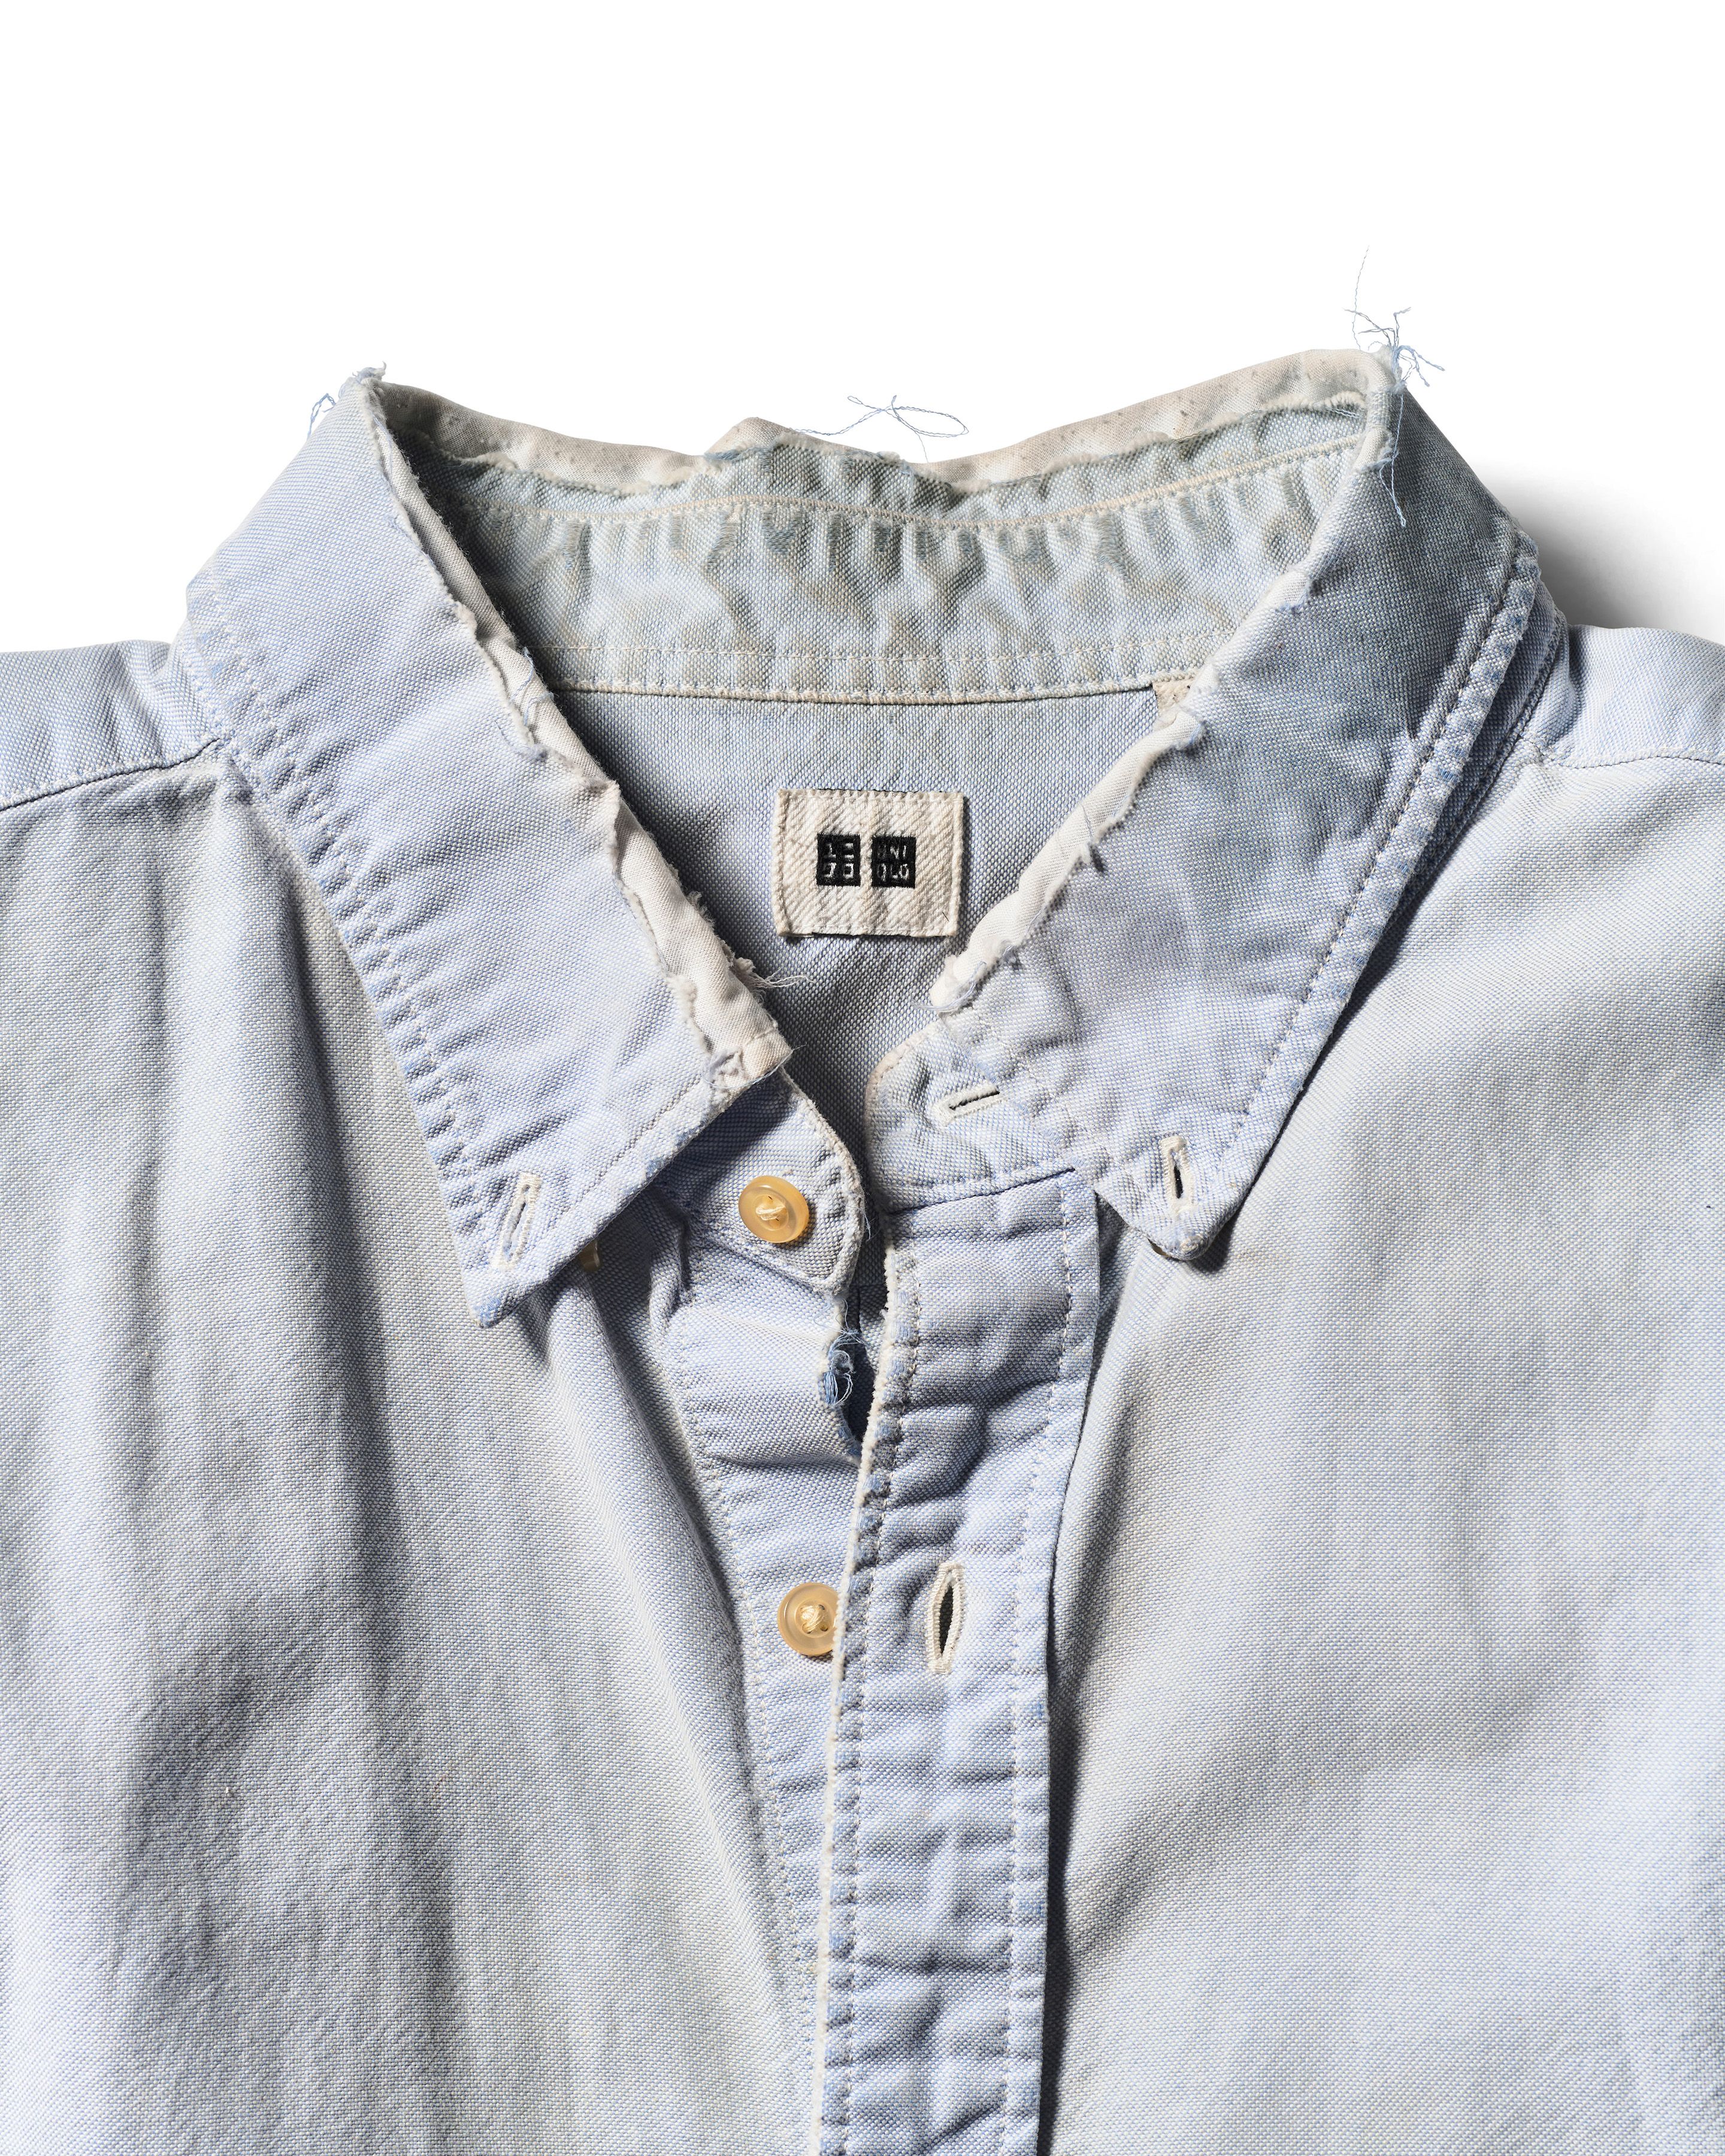 Uniqlo Men039s ButtonDown Long Sleeve Oxford Shirt Blue Check Size XS  EUC  eBay